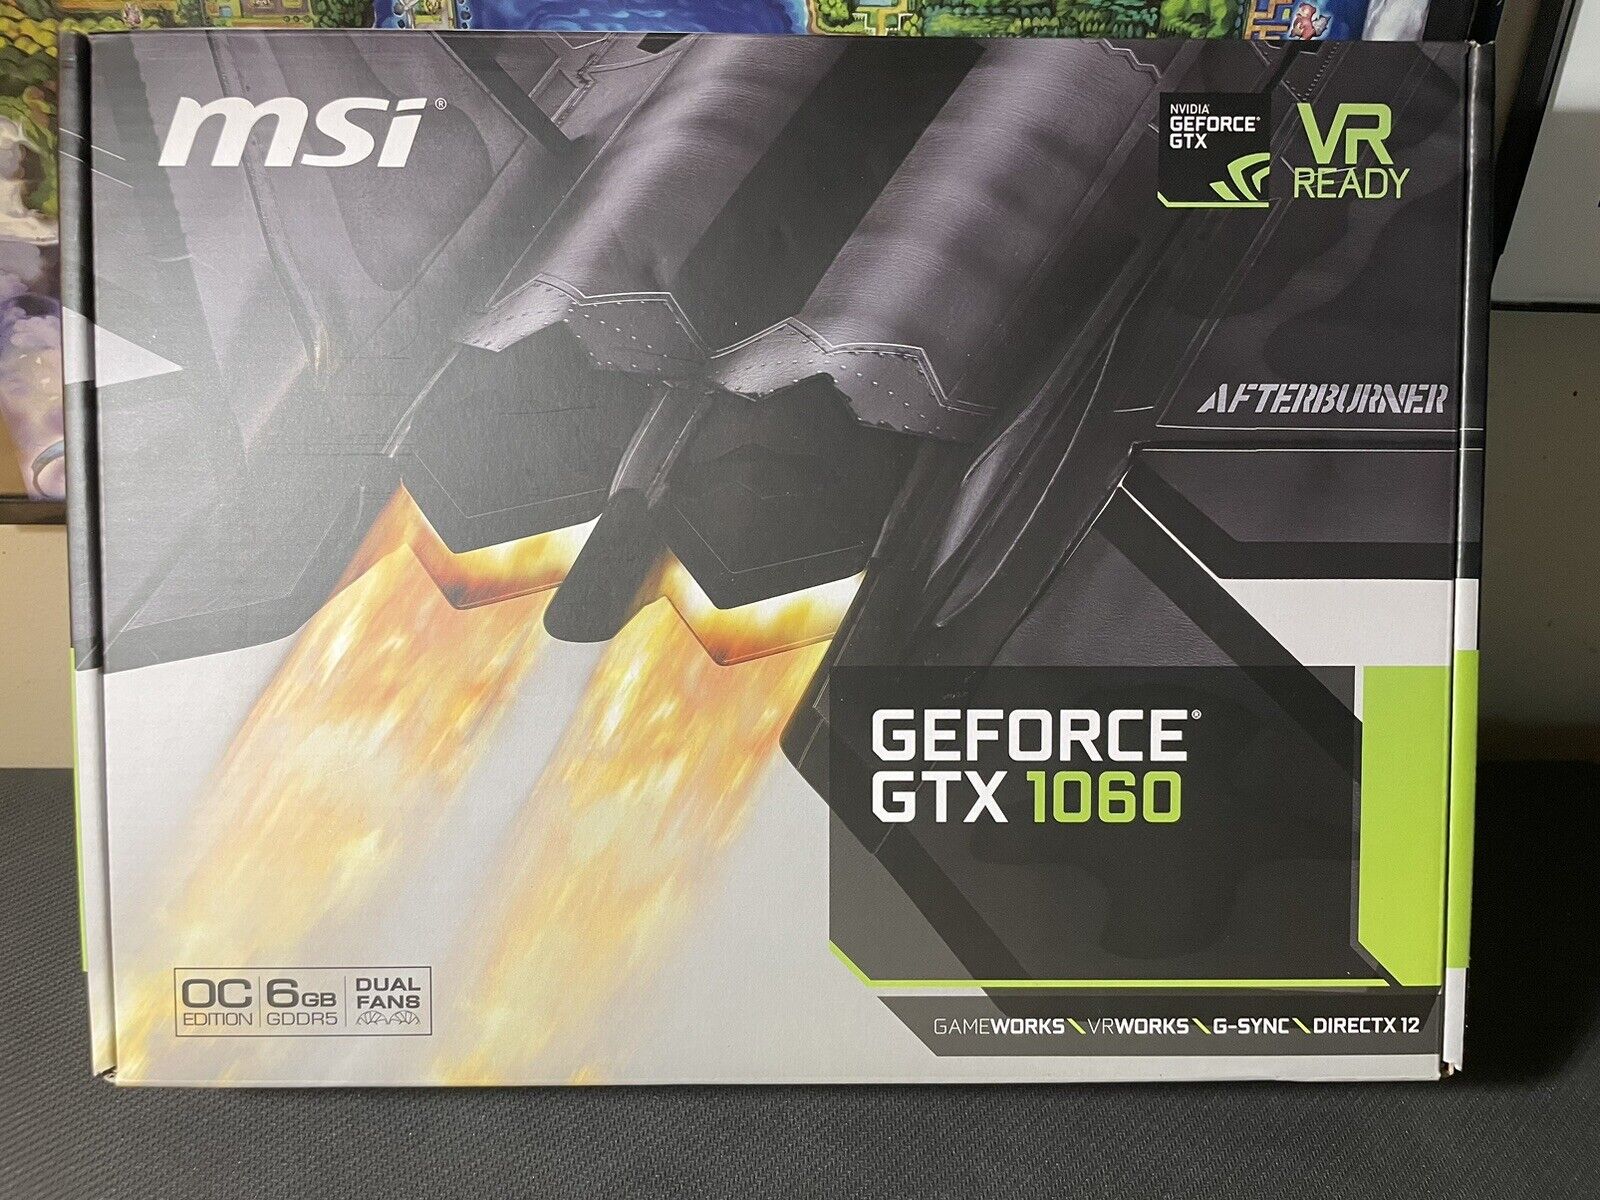 MSI GeForce GTX 1060 V1 OC GDDR5 6GB Gaming Graphics Card